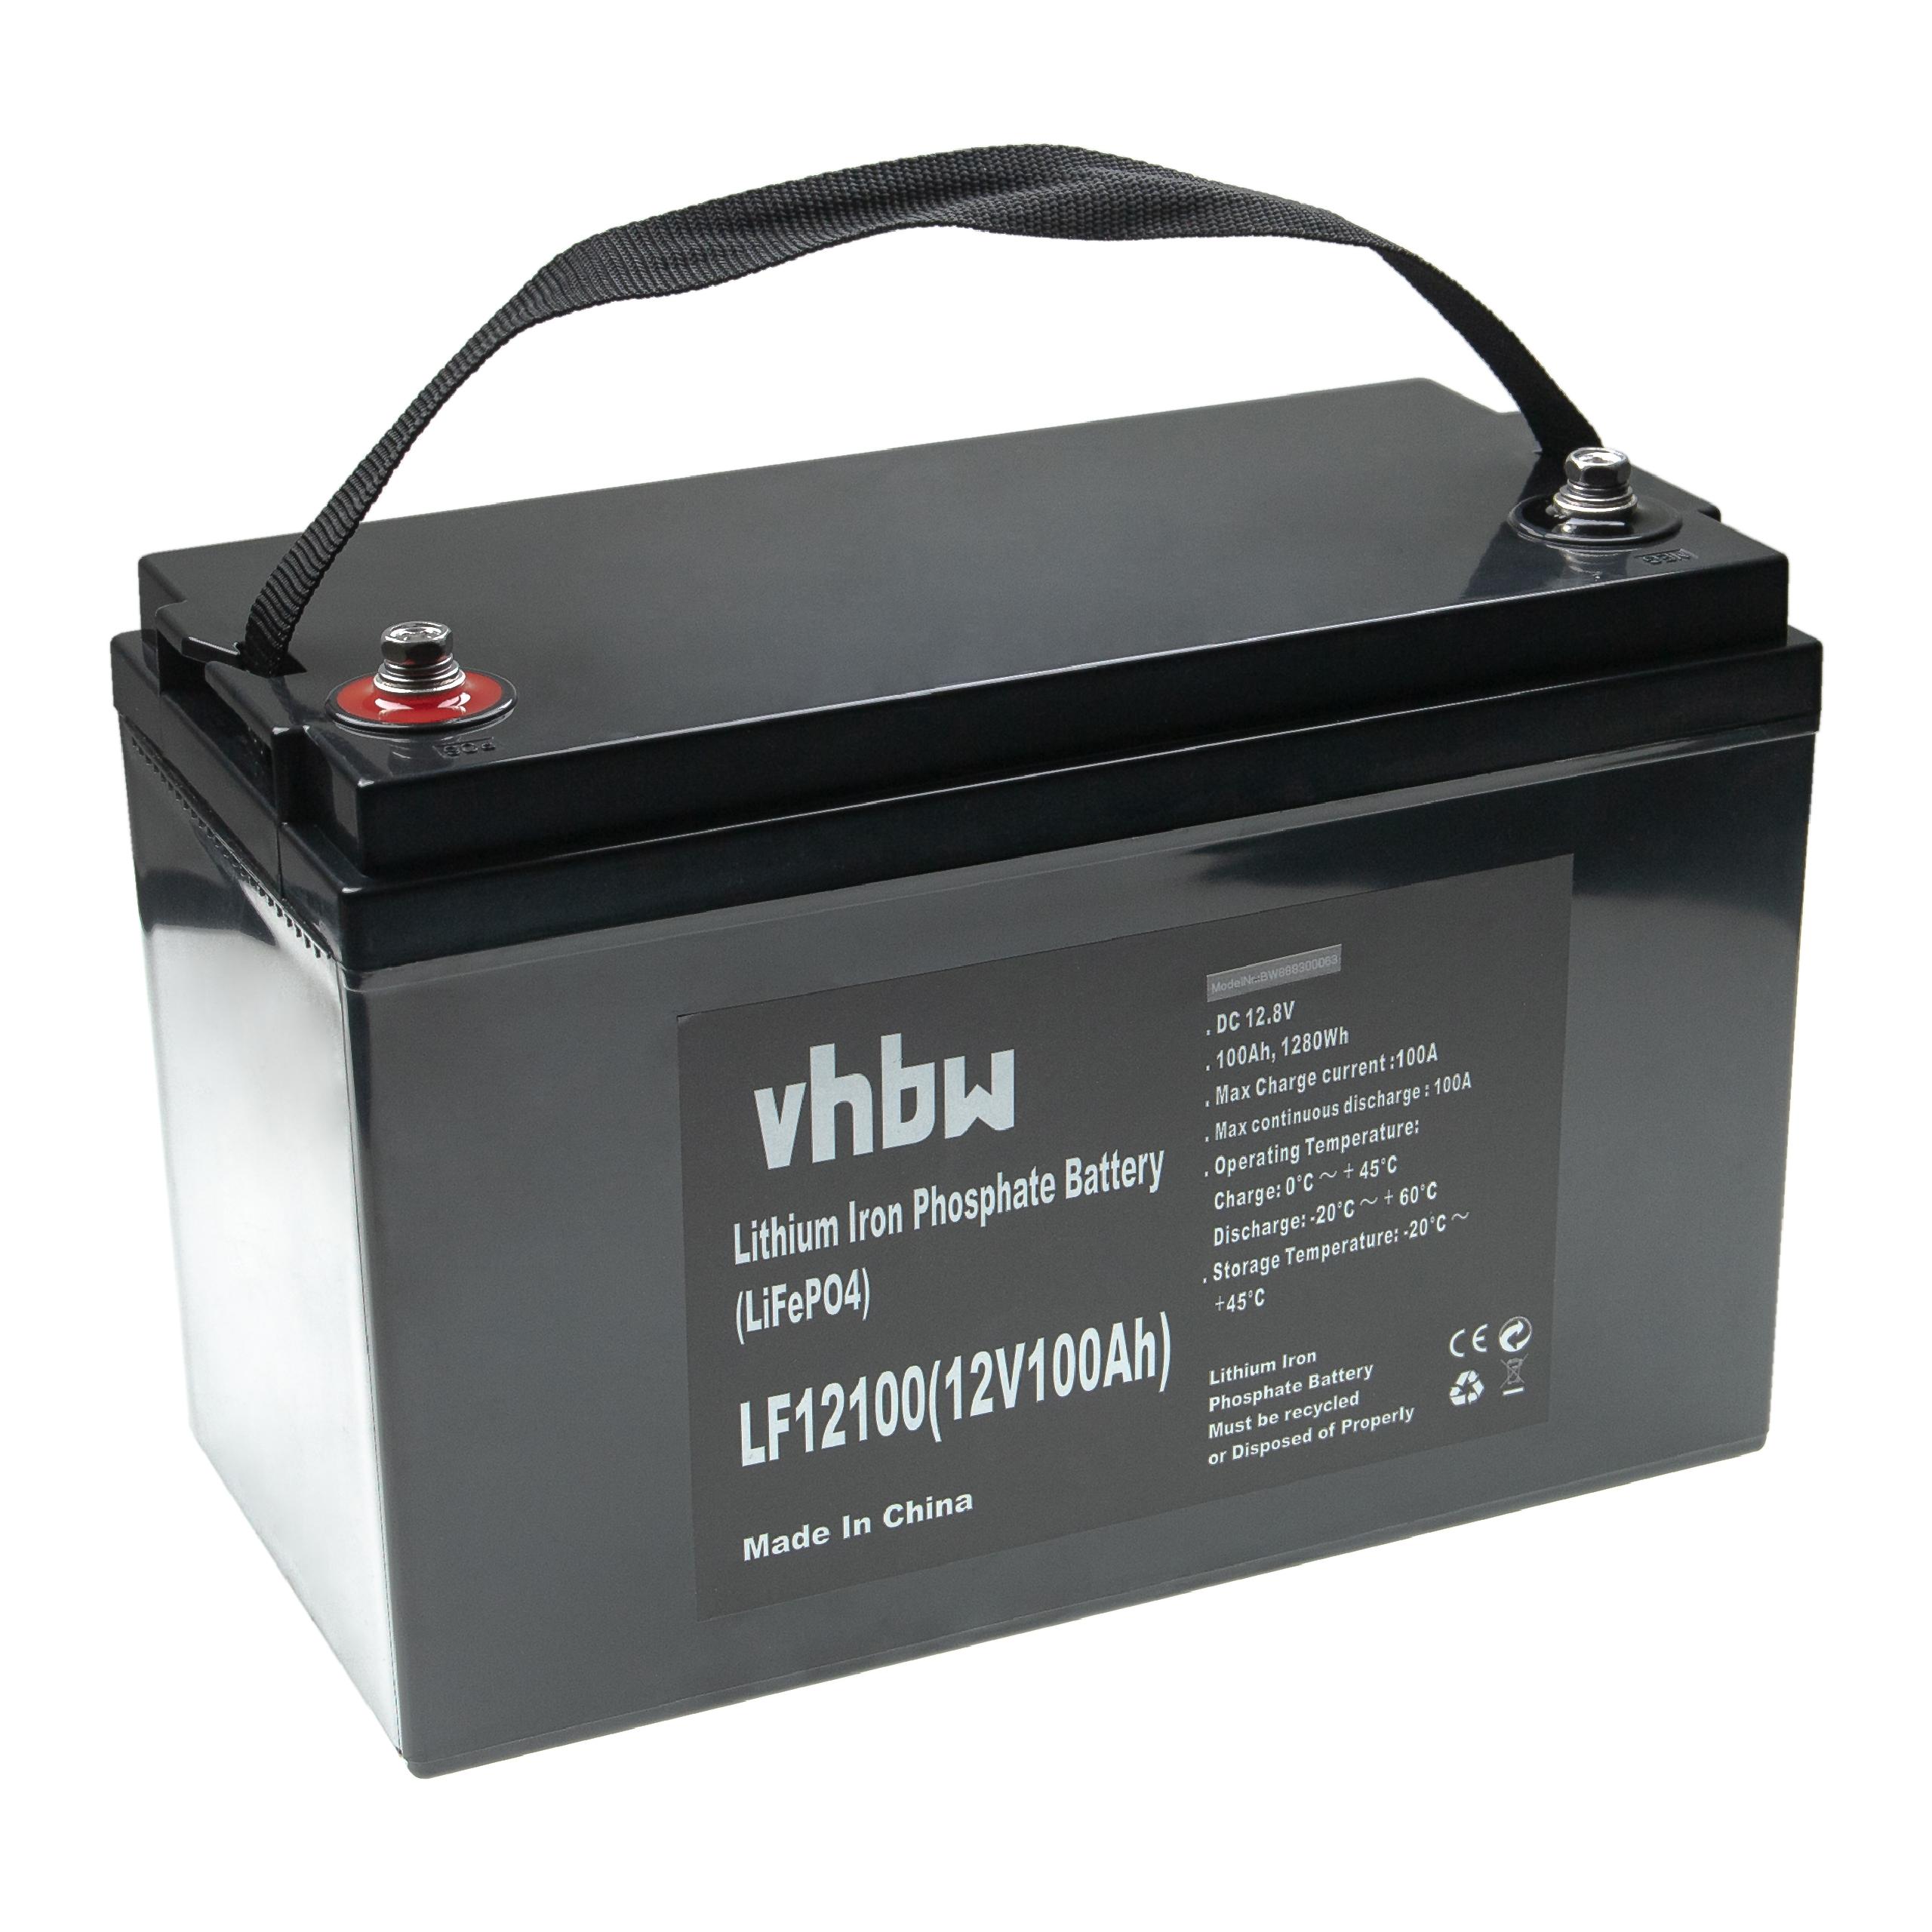 Bordbatterie Akku passend für Wohnmobil, Boot, Solaranlage - 100 Ah 12,8V LiFePO4, 100000mAh, ohne Farbe / Int